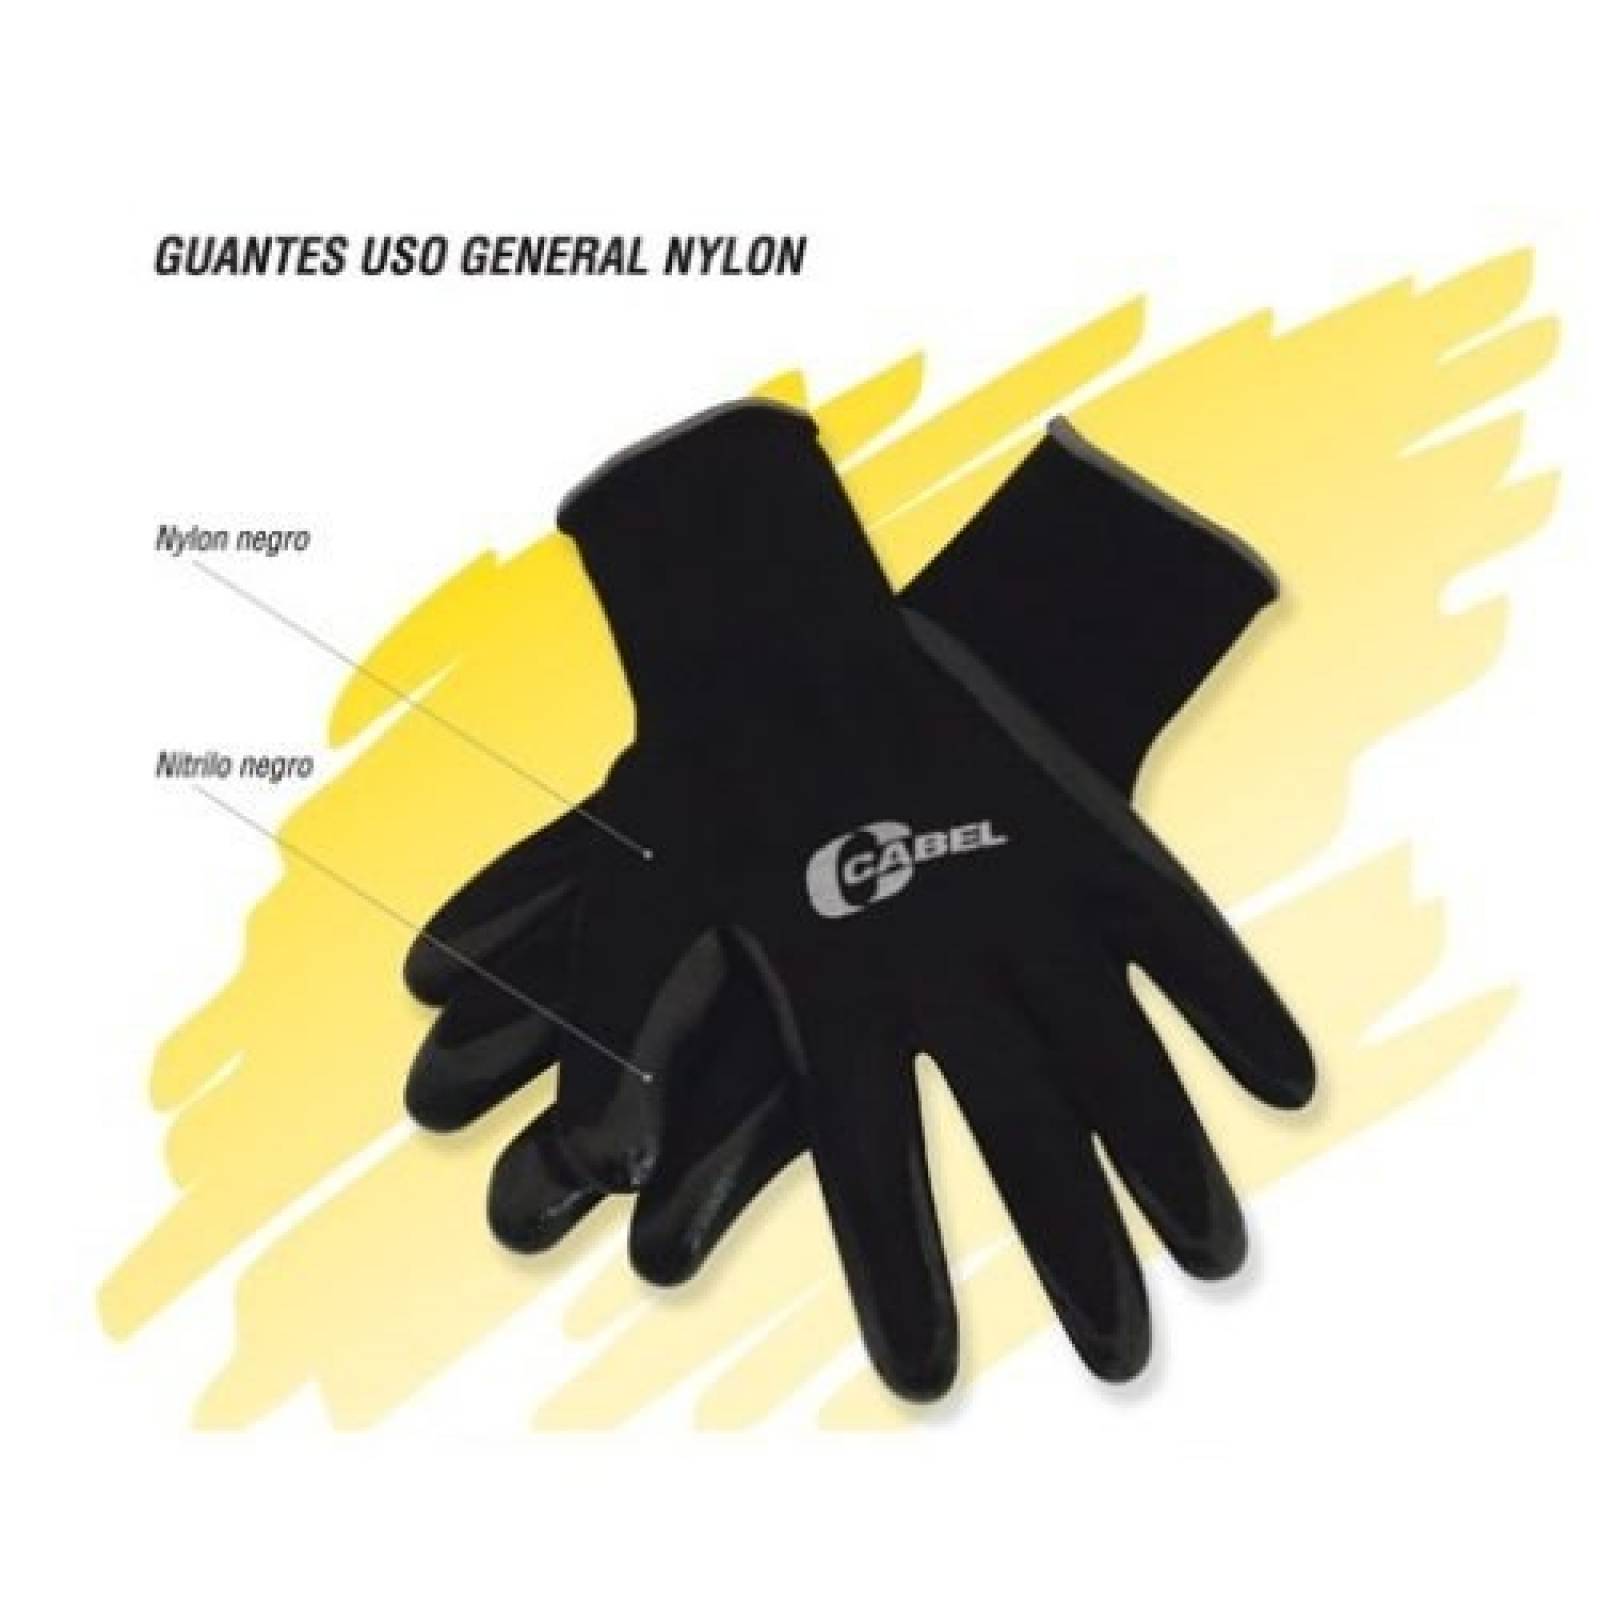 Guante Uso General Nylon No.8 Color Negro Cabel